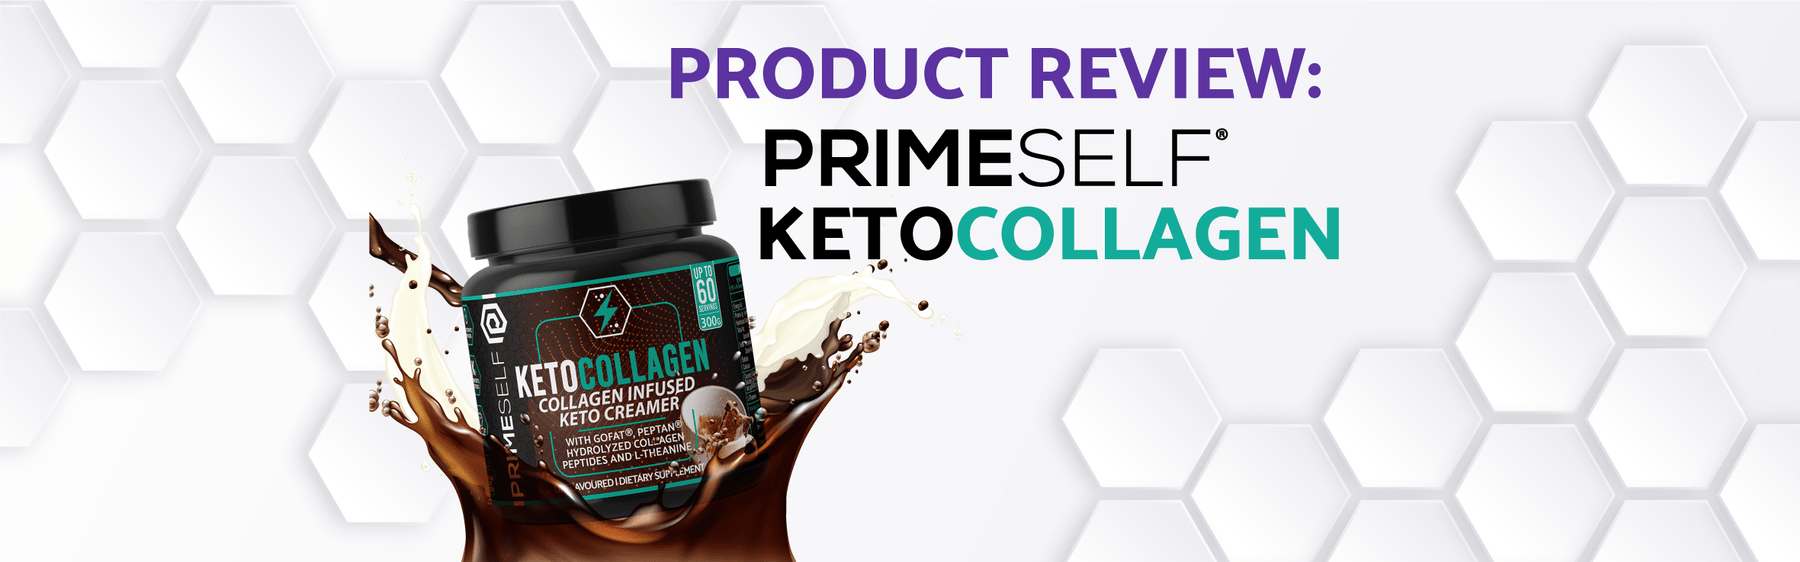 PRIMESELF Keto Collagen Product Review